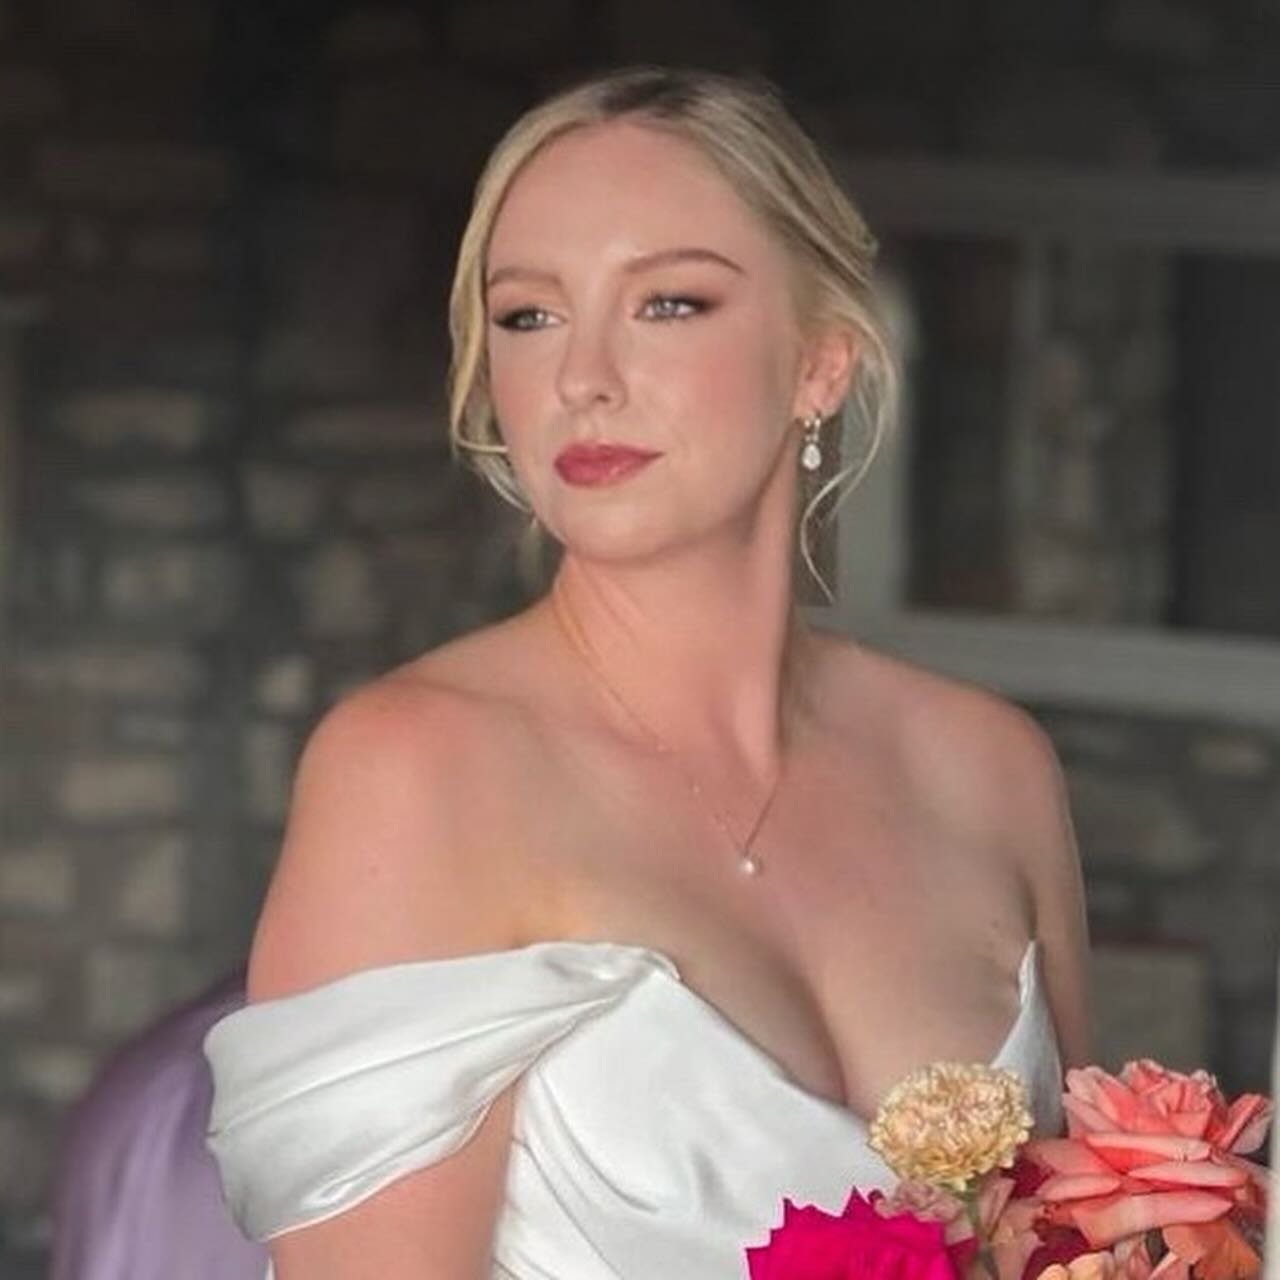 Capturing Sarah's timeless beauty as she said 'I do' at Borgo Corsignano. Proud to have styled her bridal hair and makeup. 👰💄💖
.
.
I used @charlottetilbury @schwarzkopfpro @sweedbeauty
.
.
#WeddingHair #BridalMakeup #tuscanywedding #WeddingGlam #B